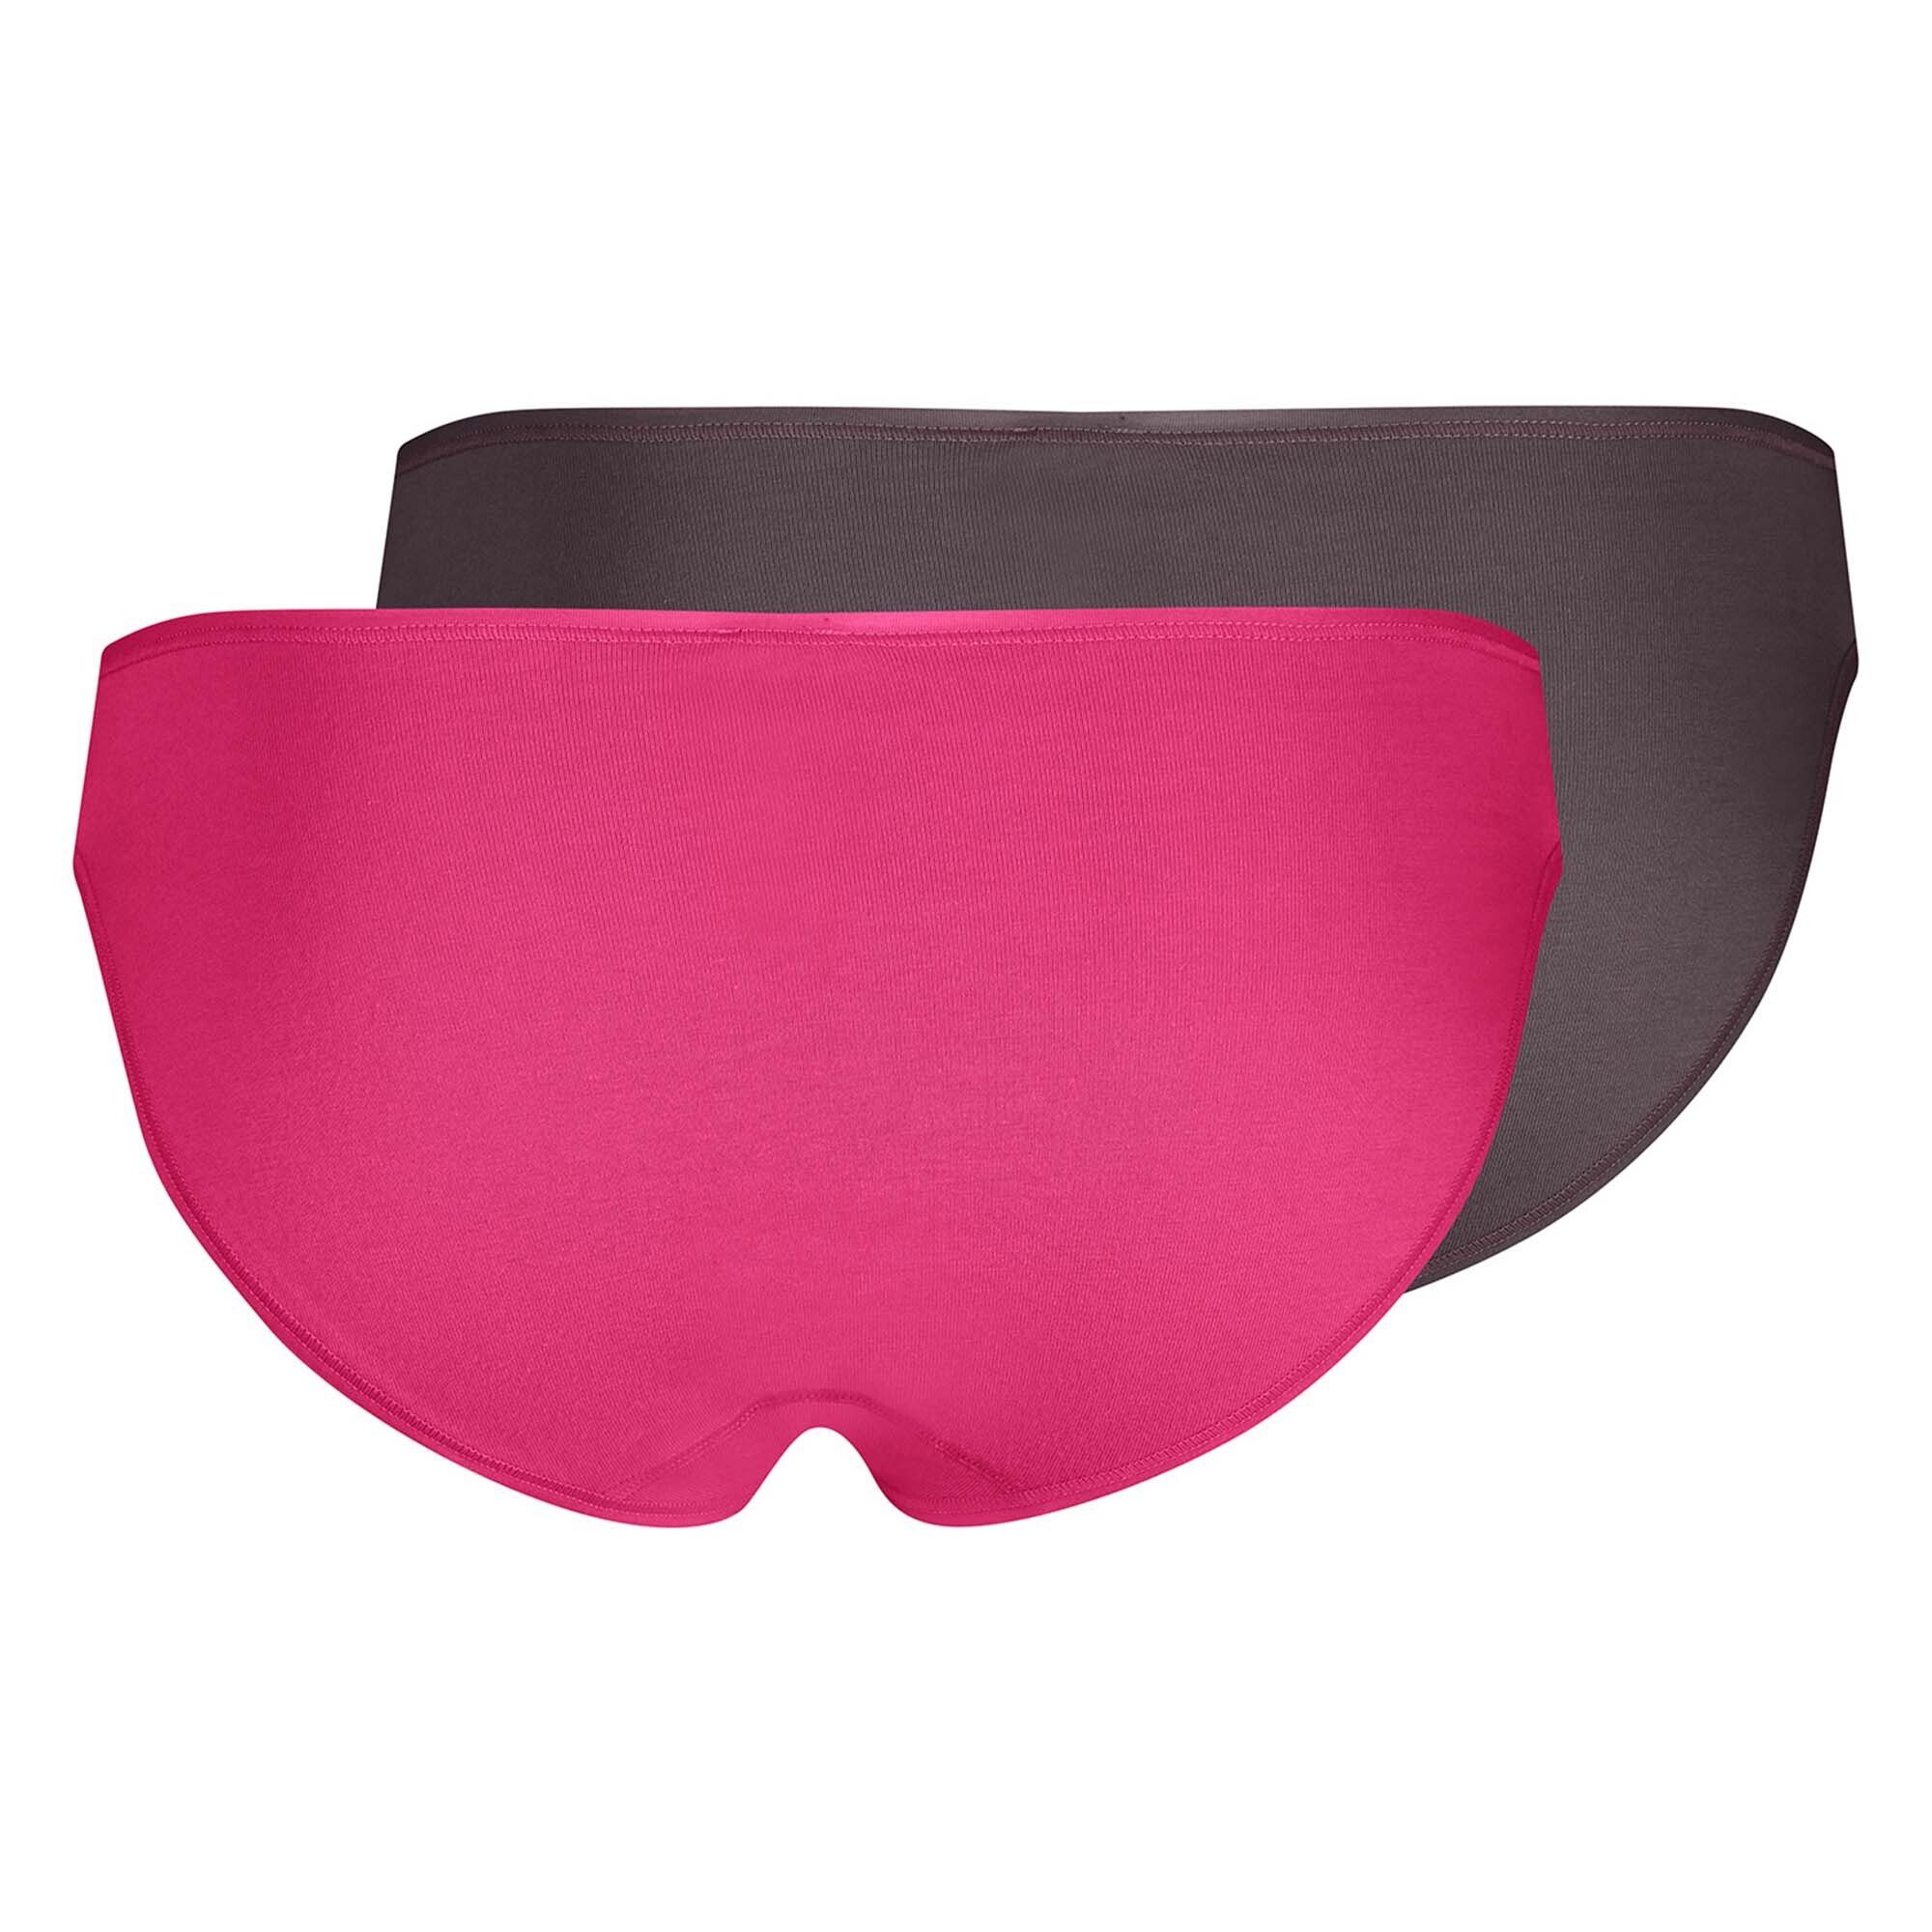 Rio Damen Slip, Bikini Pack Cotton Slip, Slip - Pink/Taupe Skiny 2er